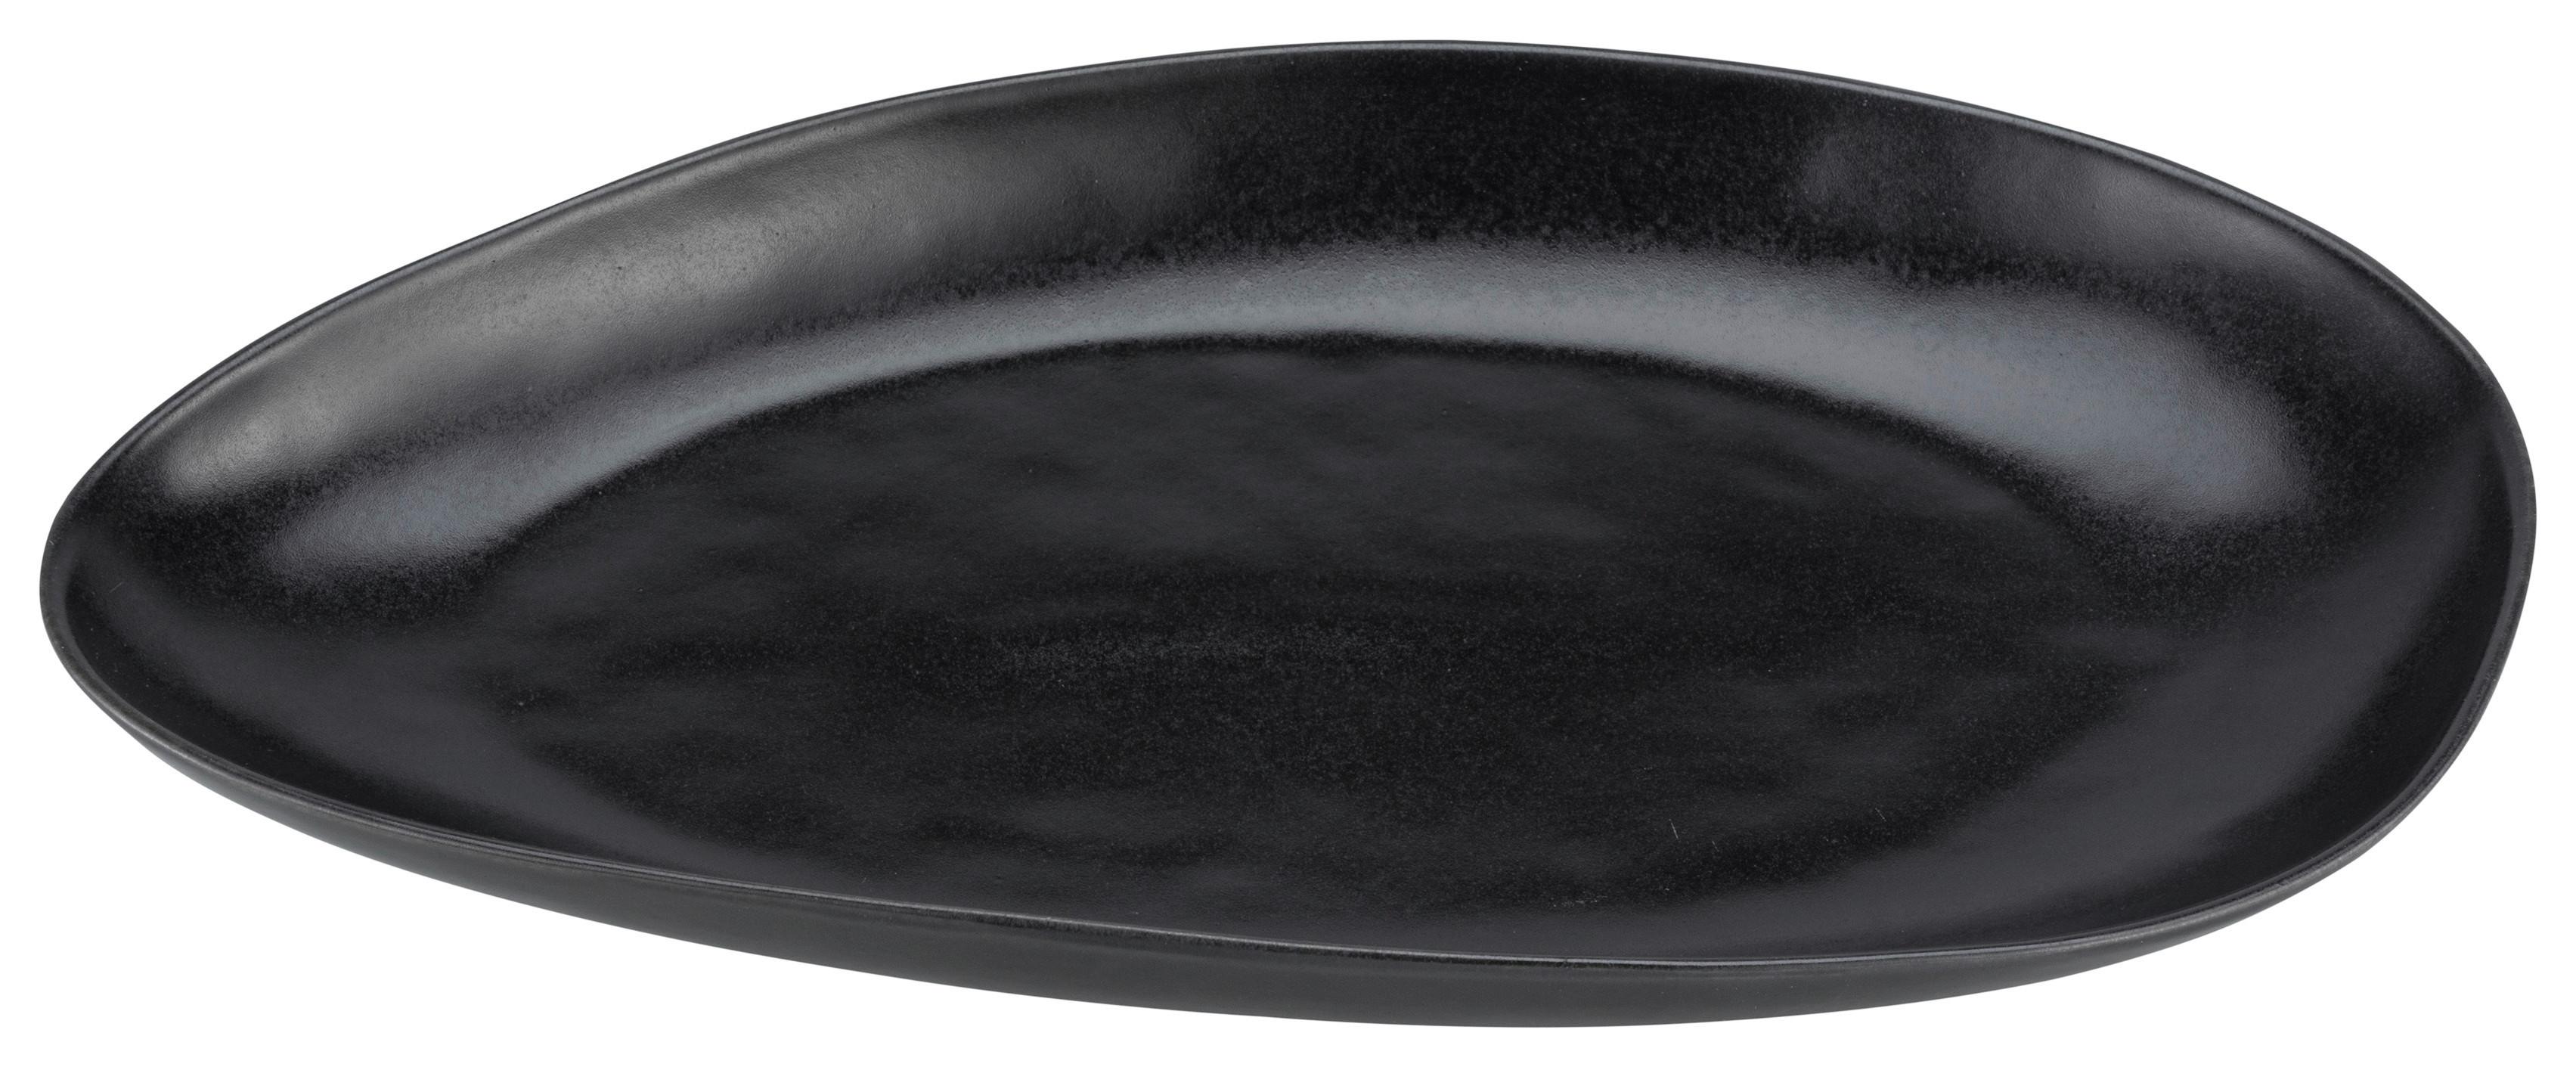 PÓŁMISEK DO SERWOWANIA GOURMET - XL - czarny, Modern, ceramika (39/22/4cm) - Premium Living